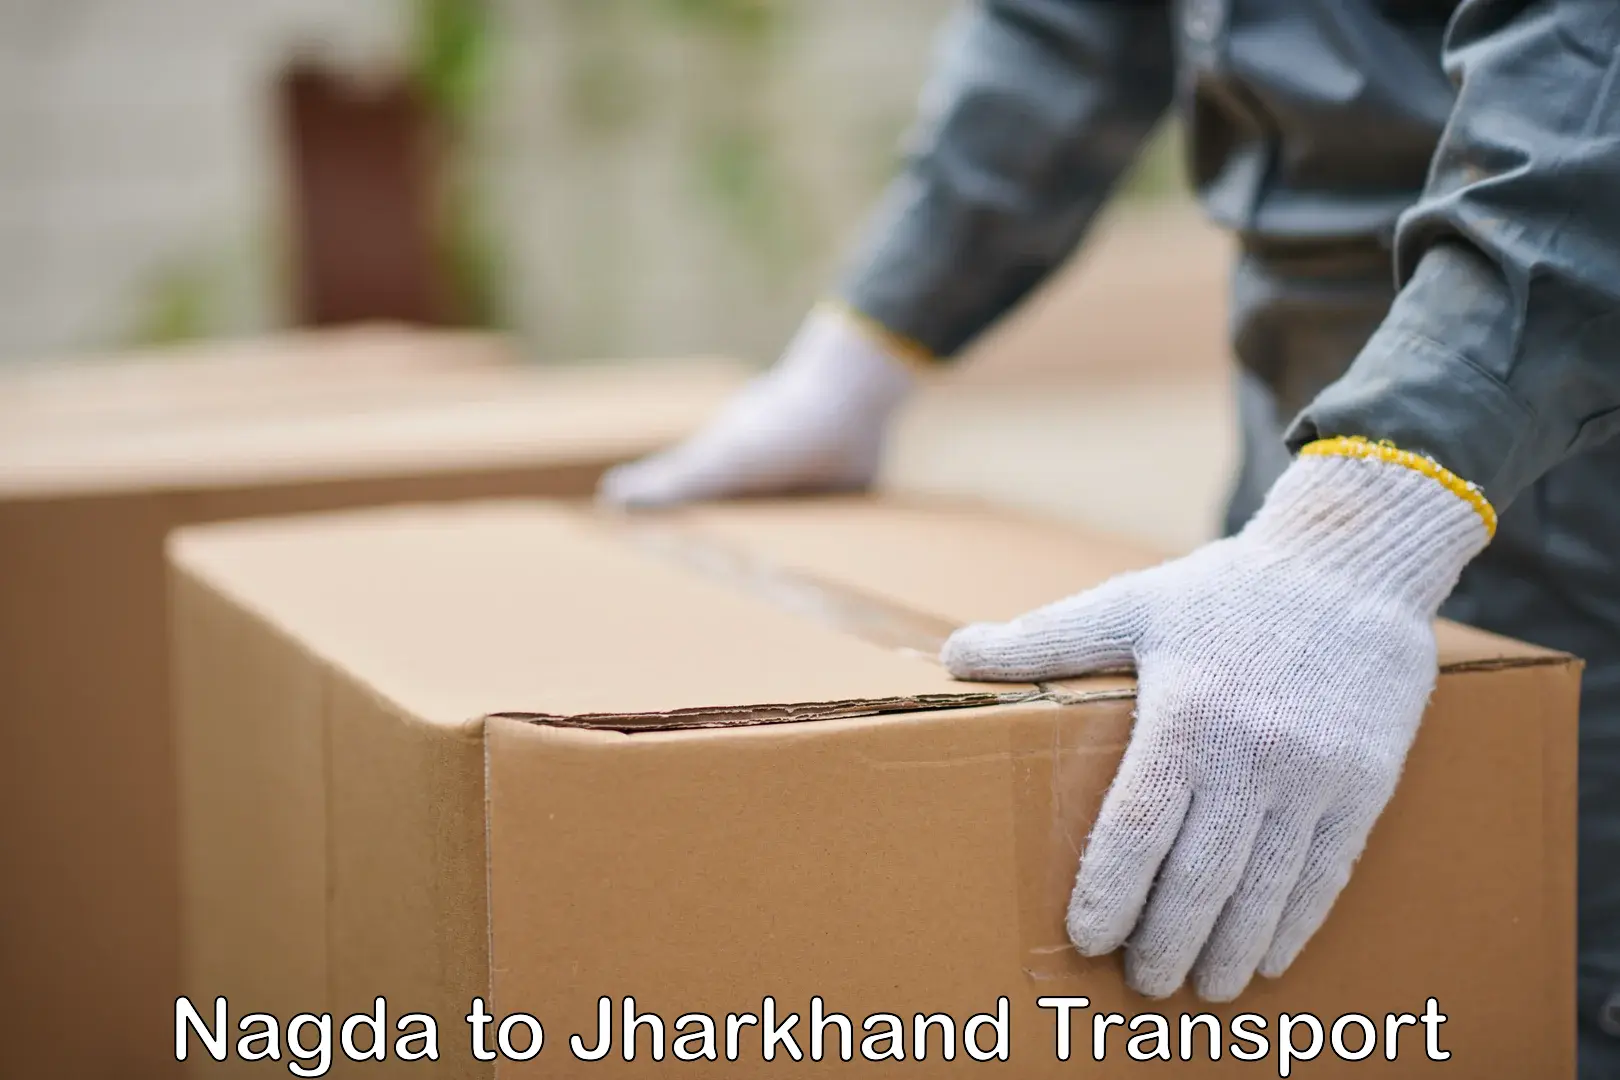 Truck transport companies in India Nagda to Bokaro Steel City